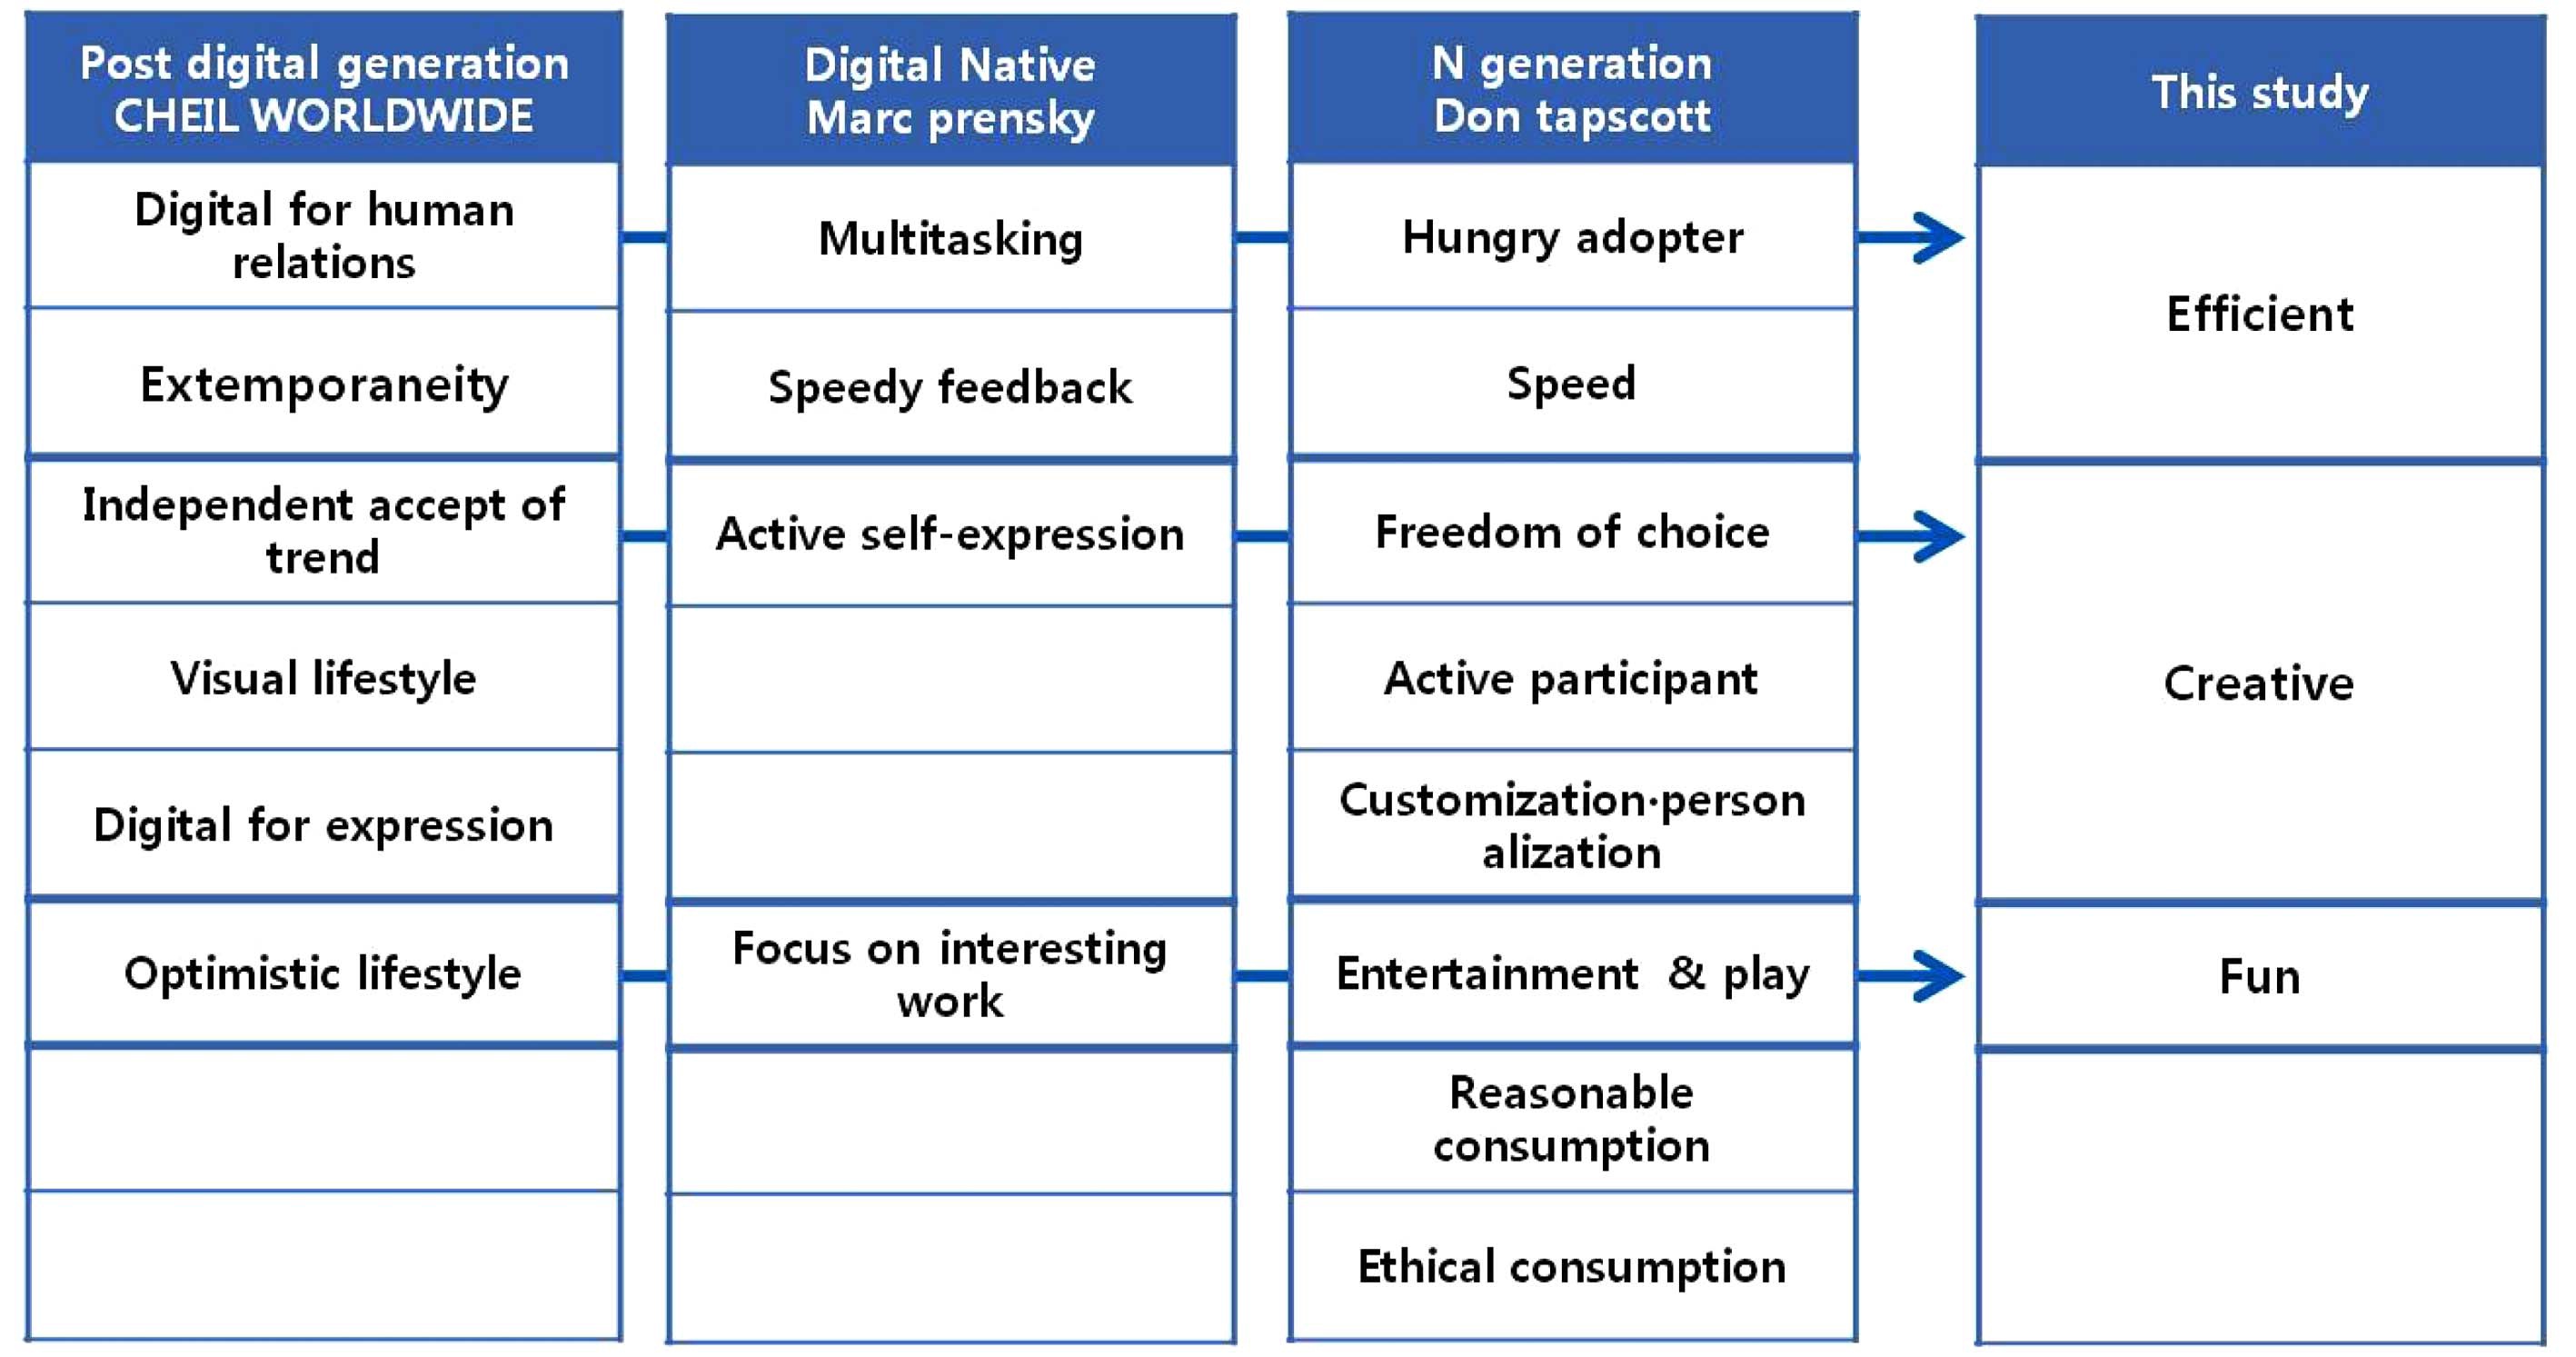 Characteristics of Post-digital generation.